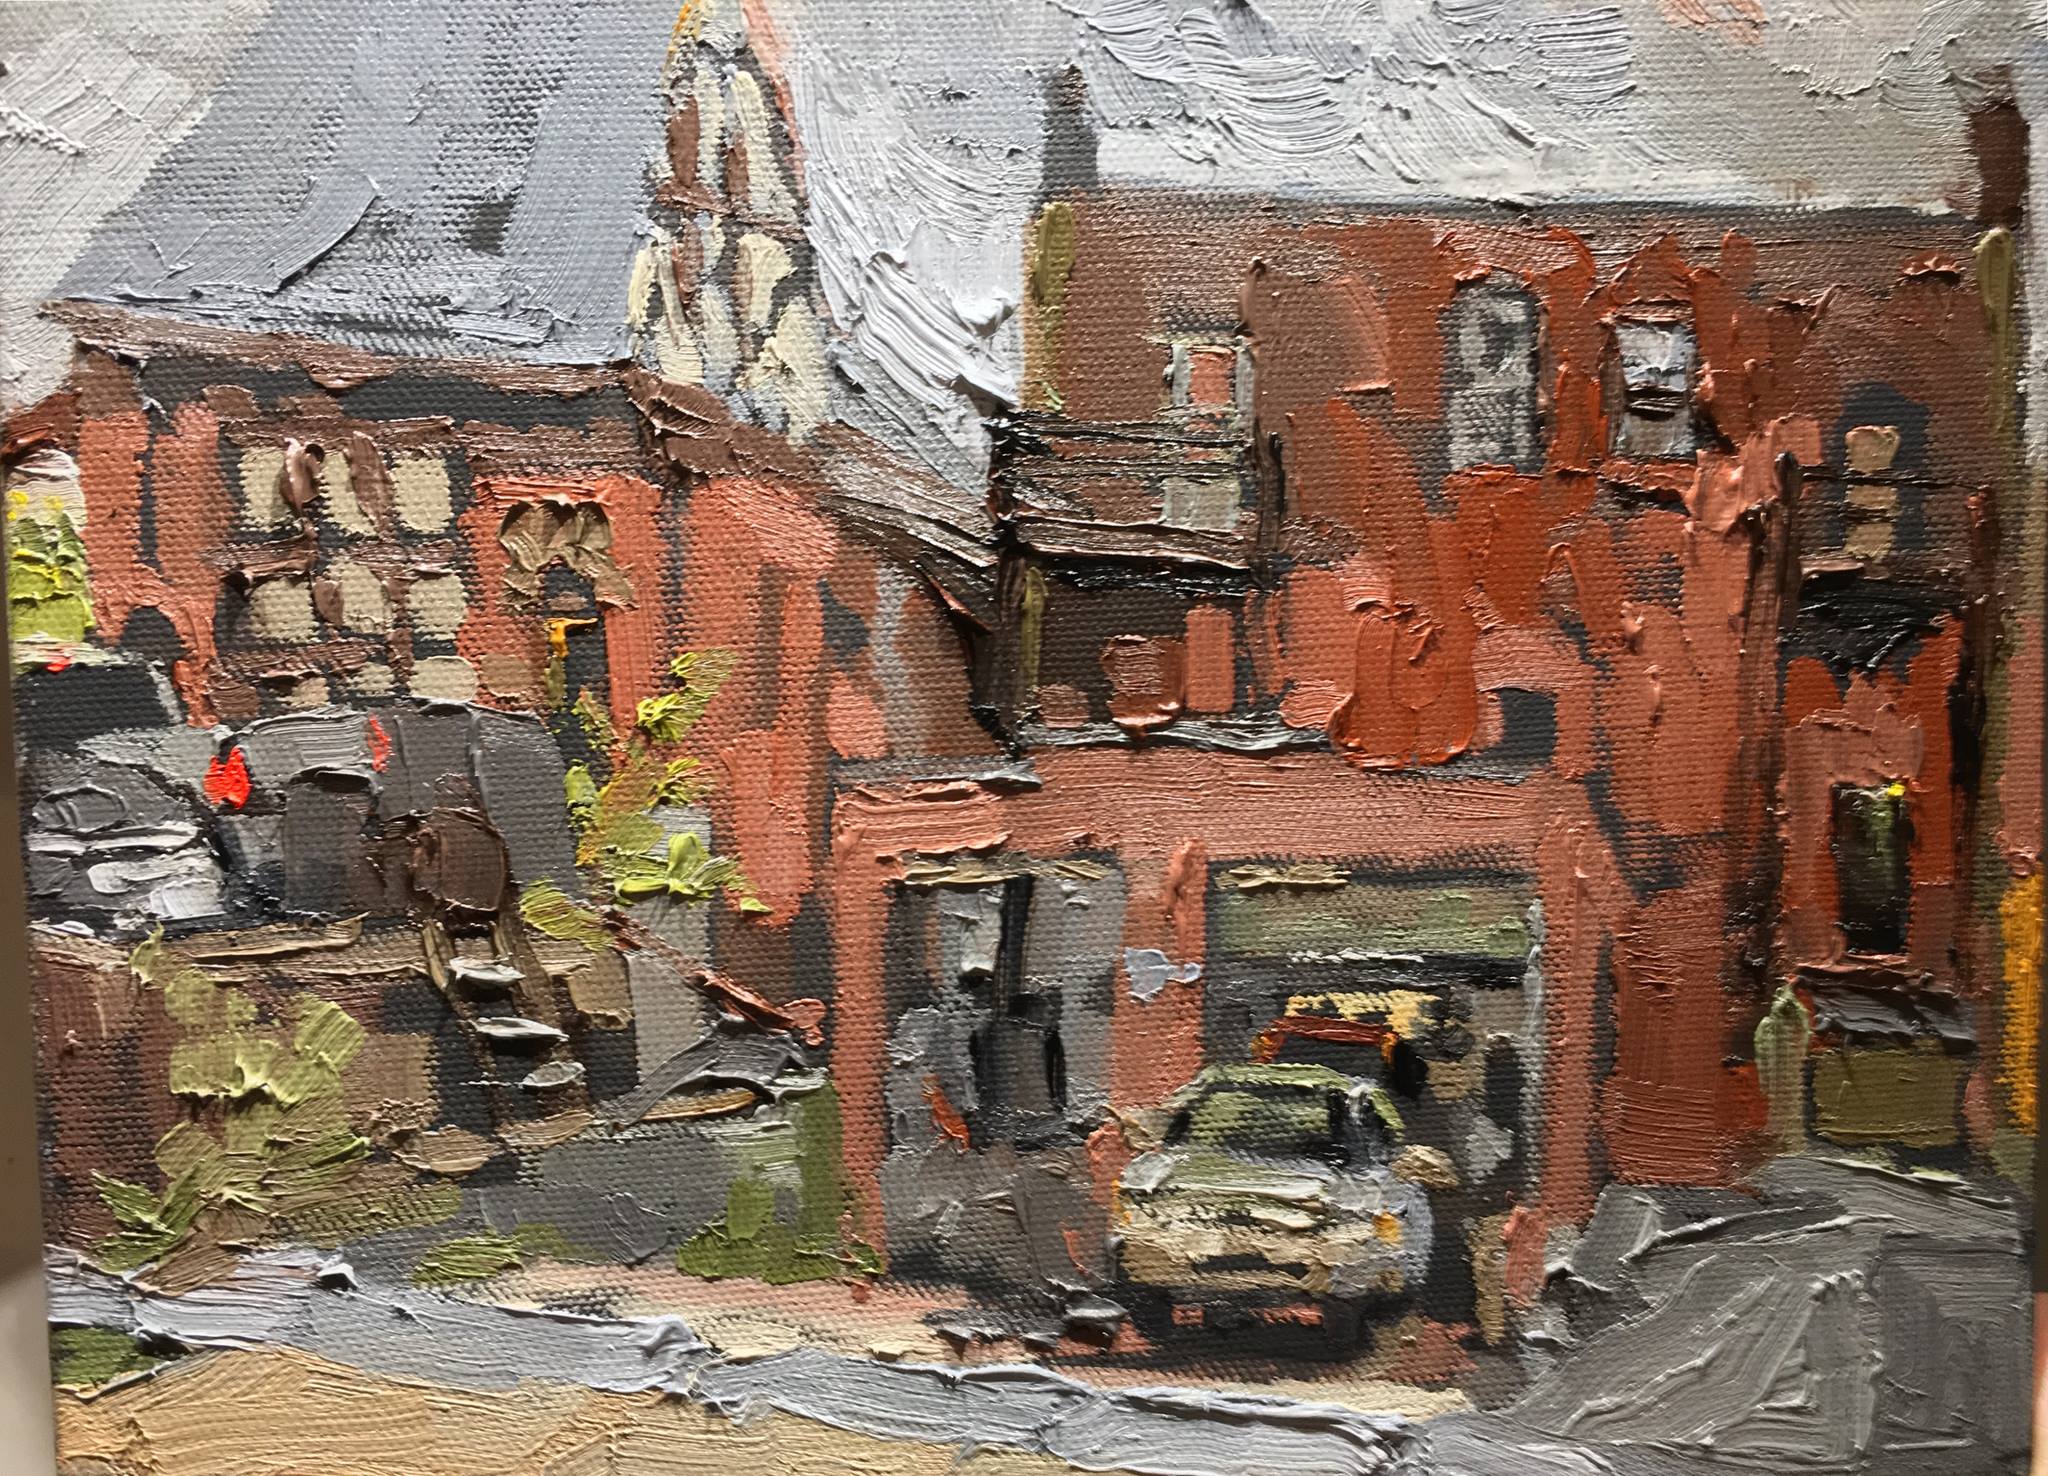 Village Auto Repair, oil on canvas, 8" x 10"